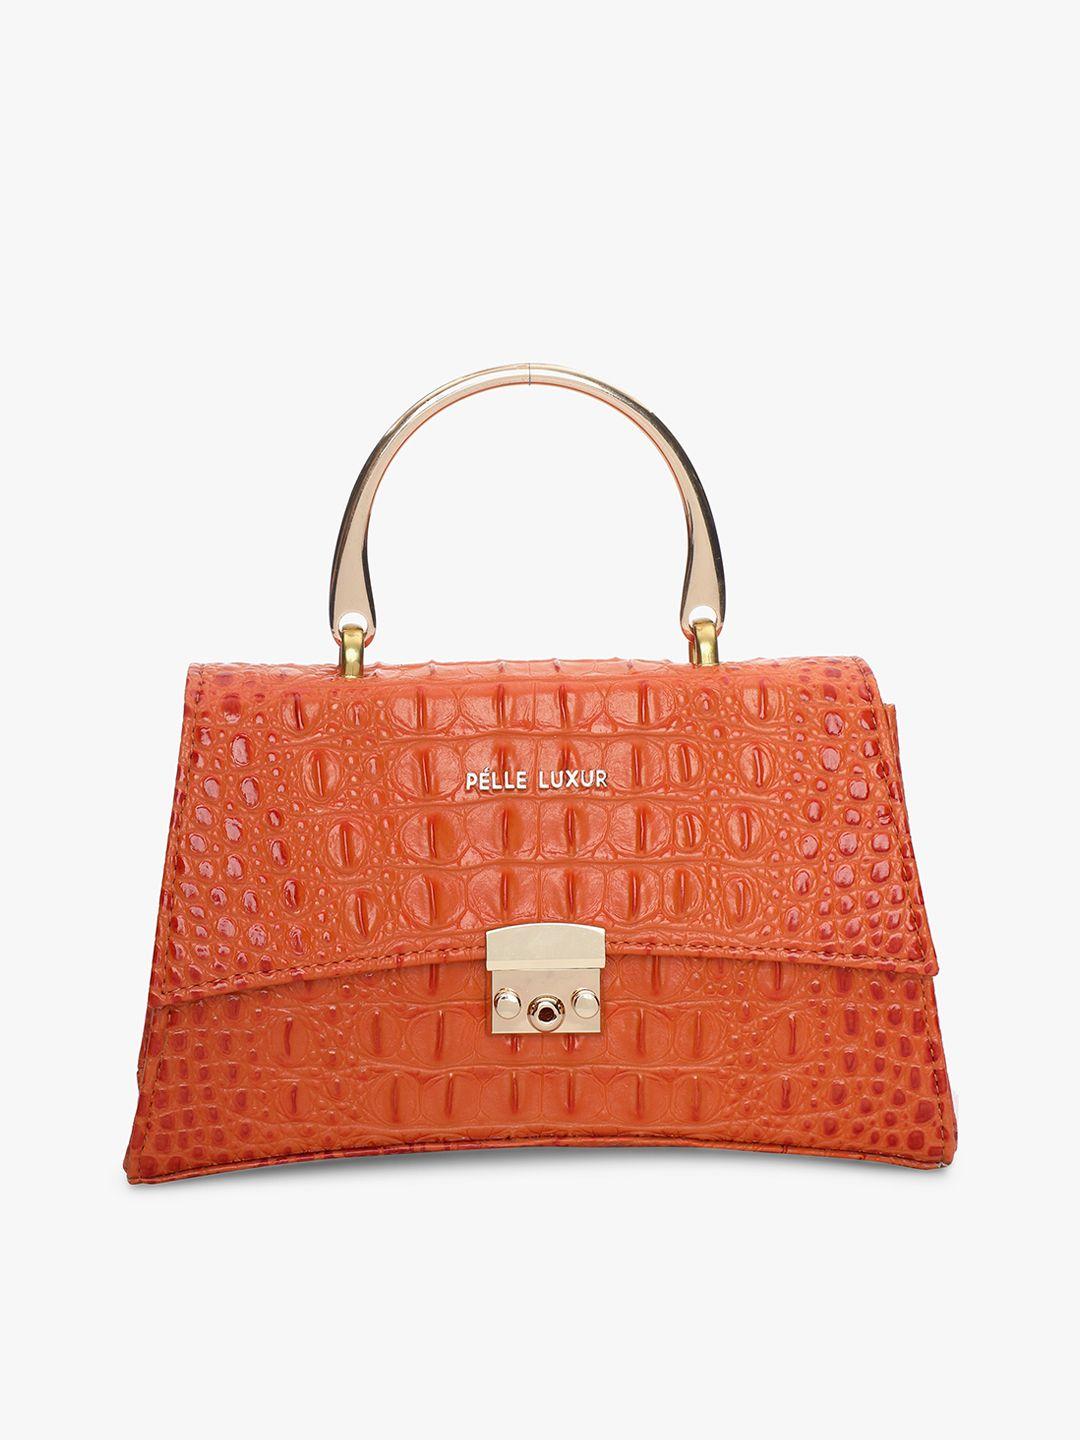 pelle luxur women structured satchel